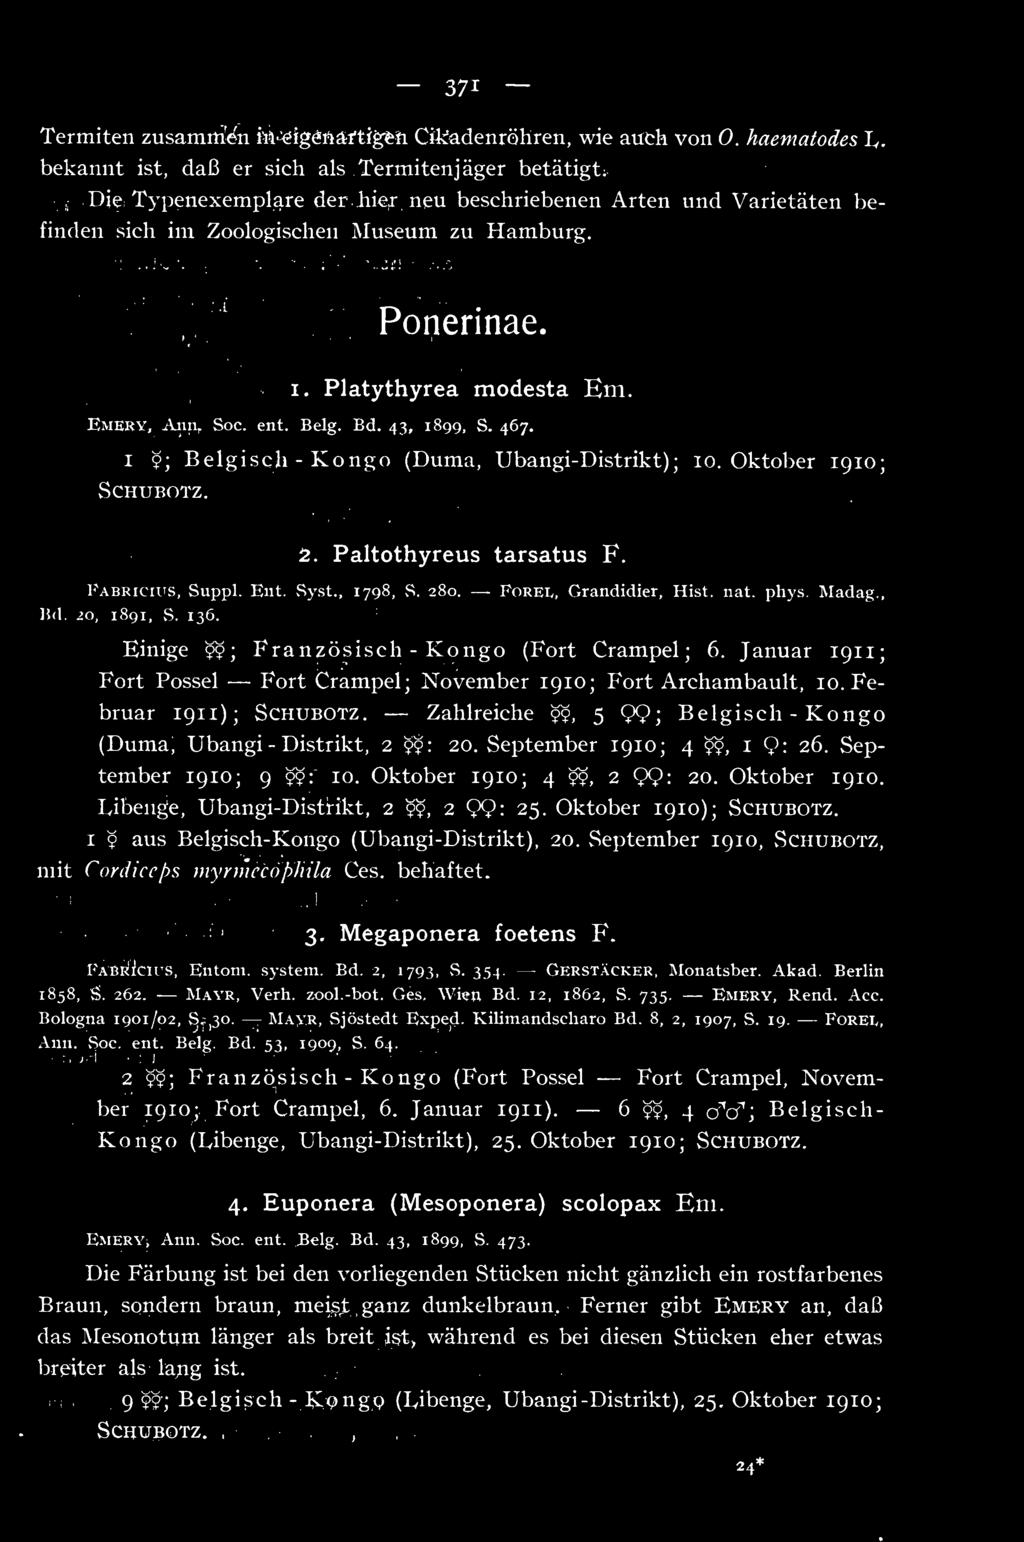 467. 1 9; Belgisch - Kongo (Duma, Ubangi-Distrikt) ; 10. Oktober 1910; vschubotz. 2. Paltothyreus tarsatus F. Fabricius, Suppl. Ent. vsyst., 1798, vs. 280. Forei., Grandidier, Hist. nat. phys. Madag.